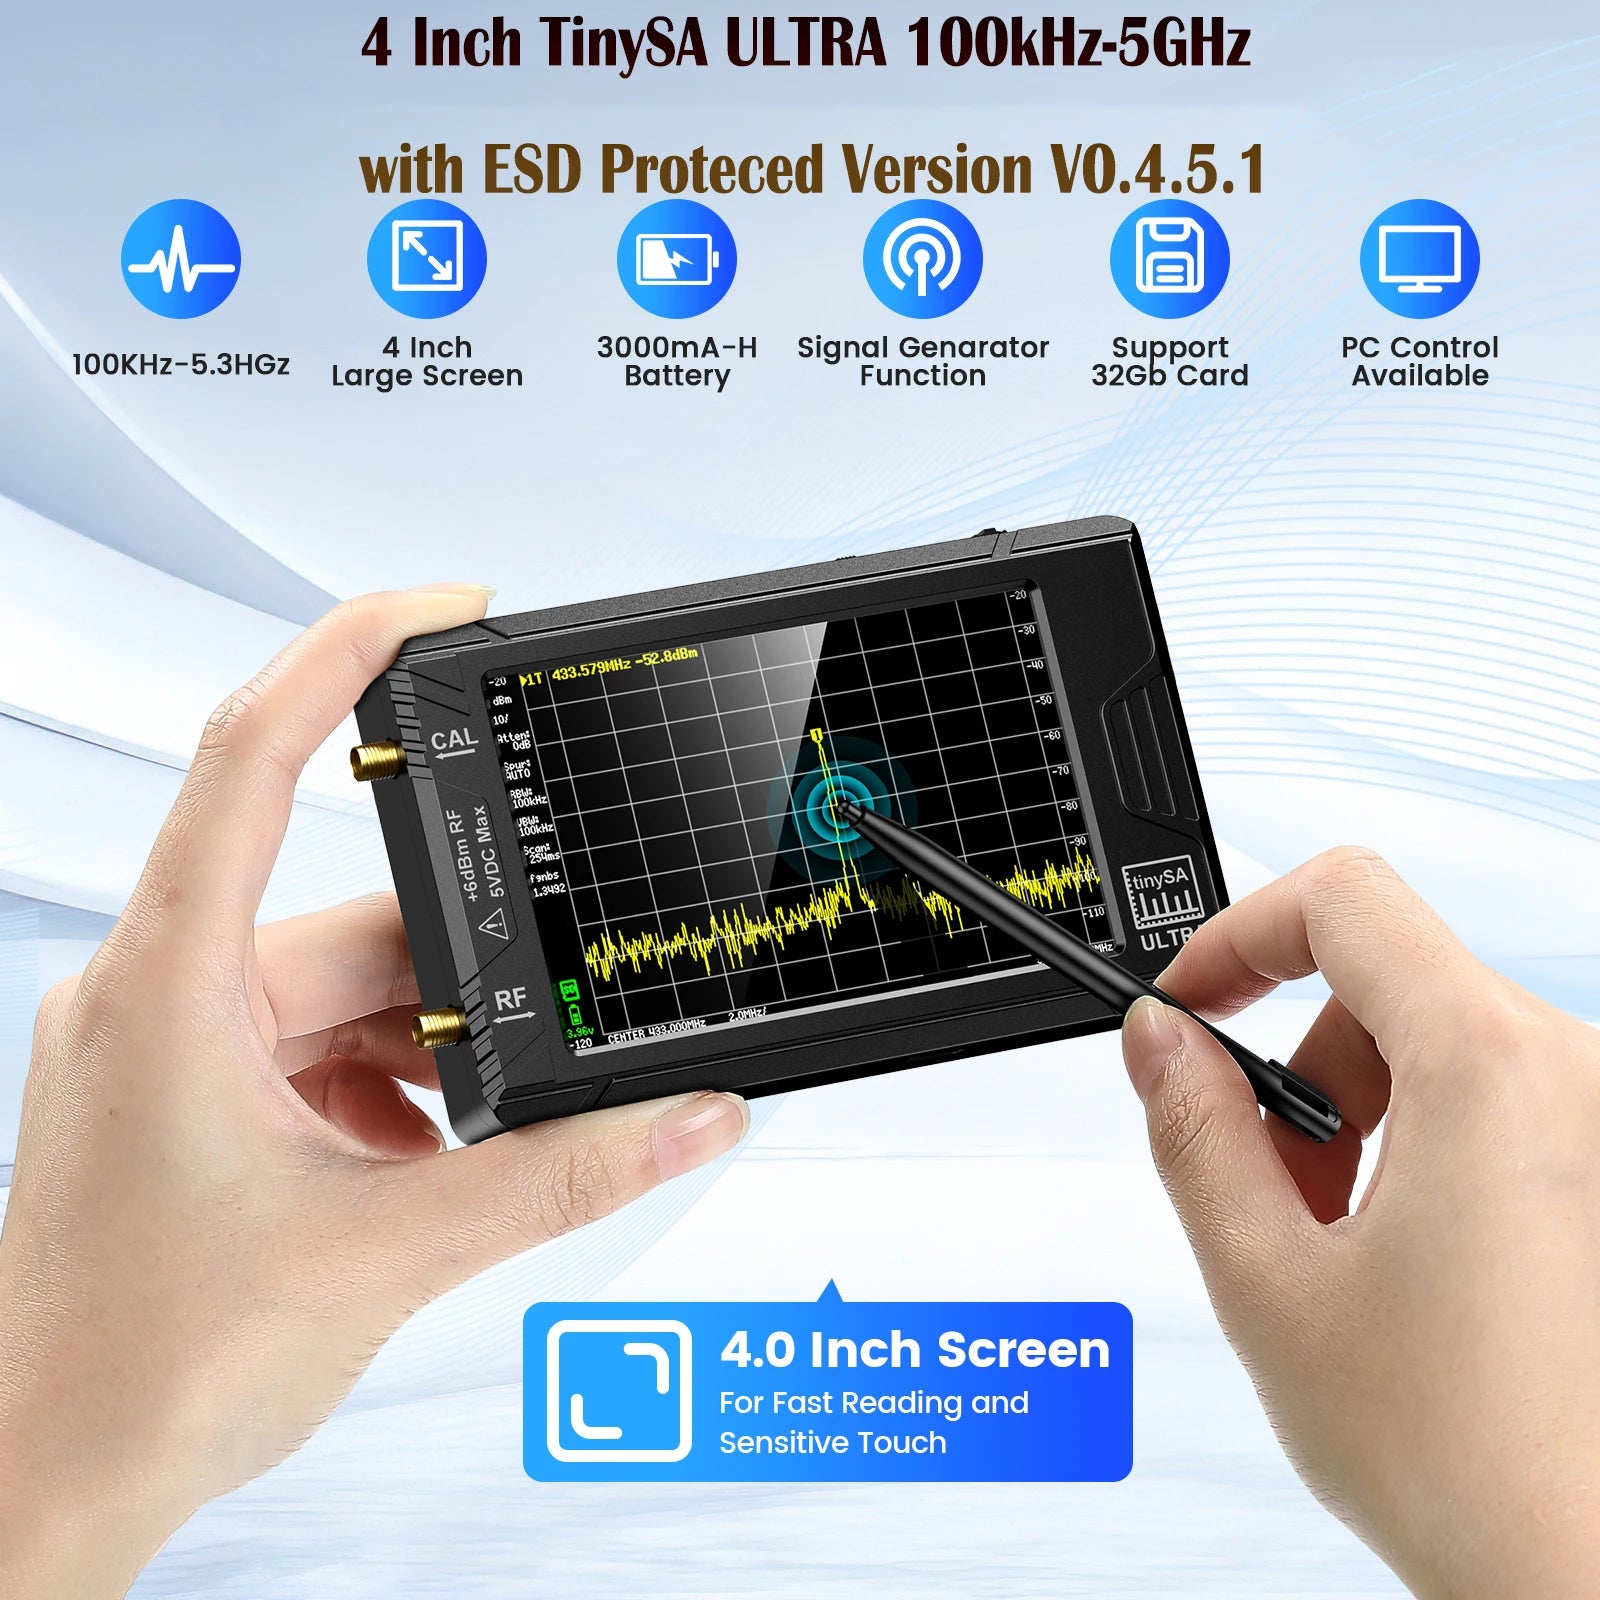 2023 New Handheld 2.8" Display Tiny Spectrum Analyzer TinySA ULTRA 4" Display 100kHz to 5.3GHz with 32GB Card Version V0.4.5.1